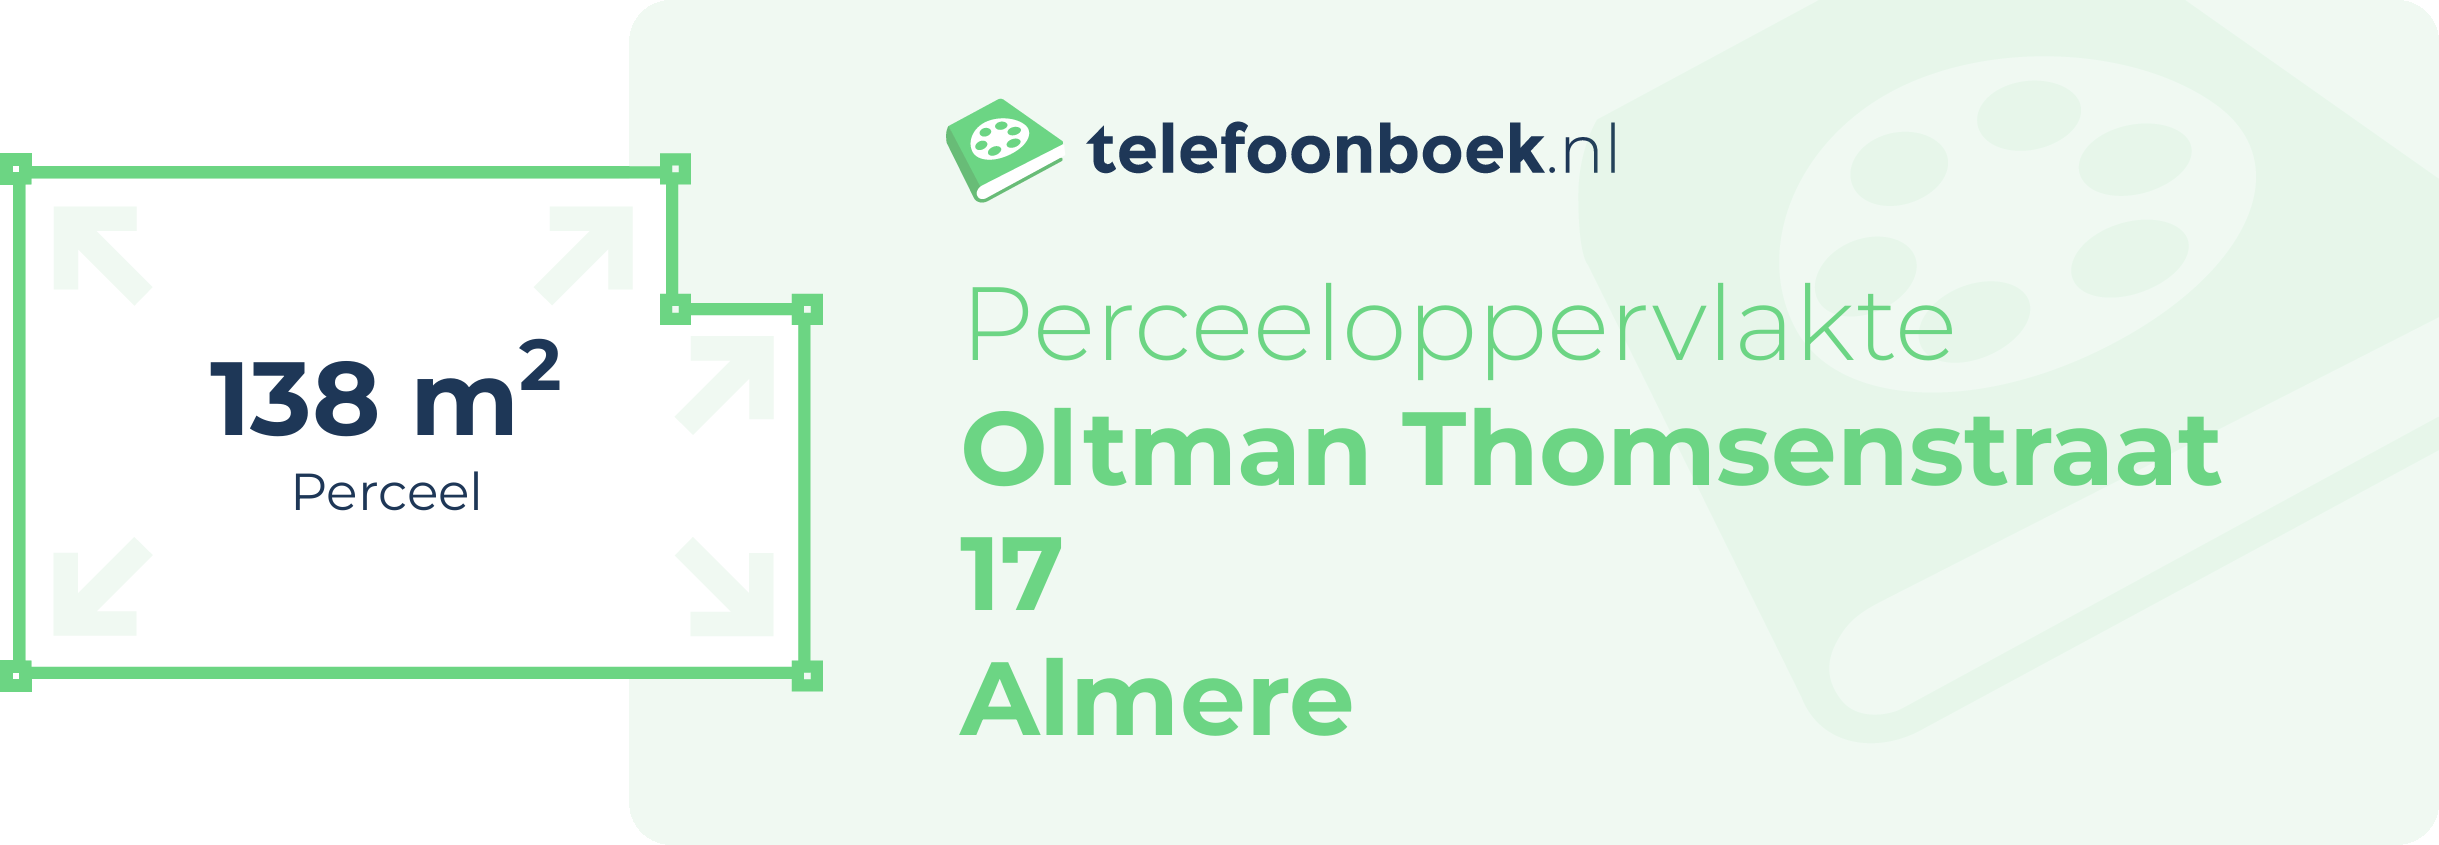 Perceeloppervlakte Oltman Thomsenstraat 17 Almere